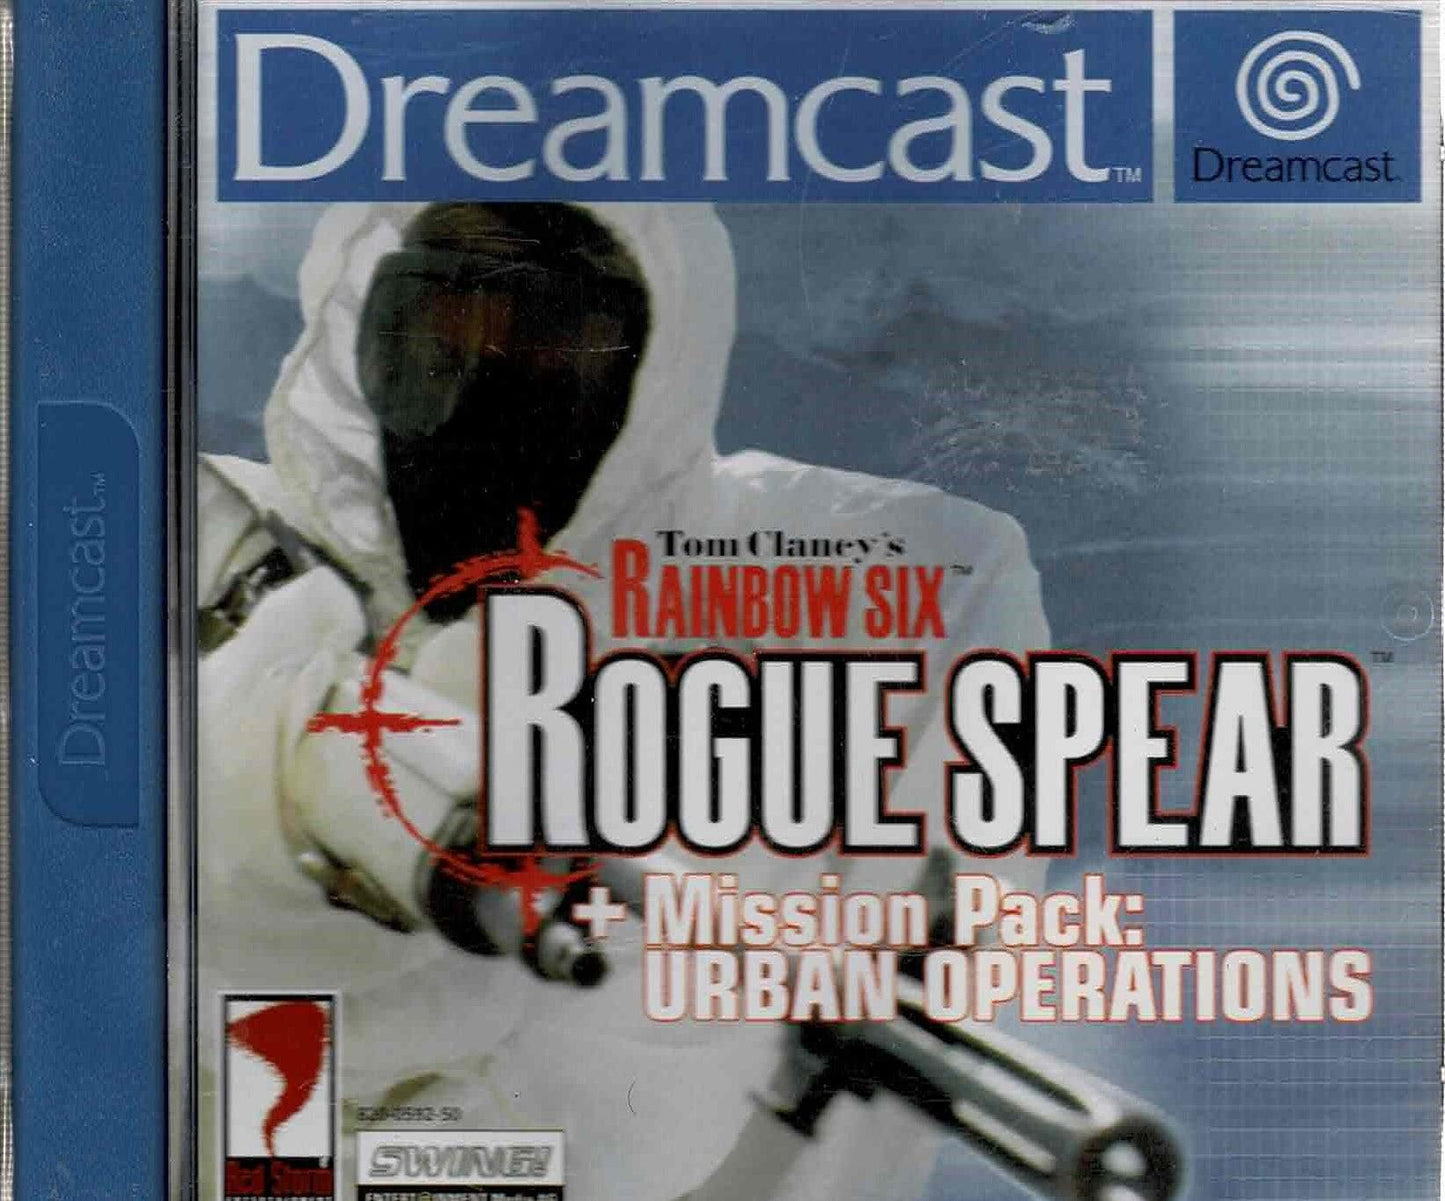 Tom Clancy's Rainbow Six Rogue Spear - ZZGames.dk